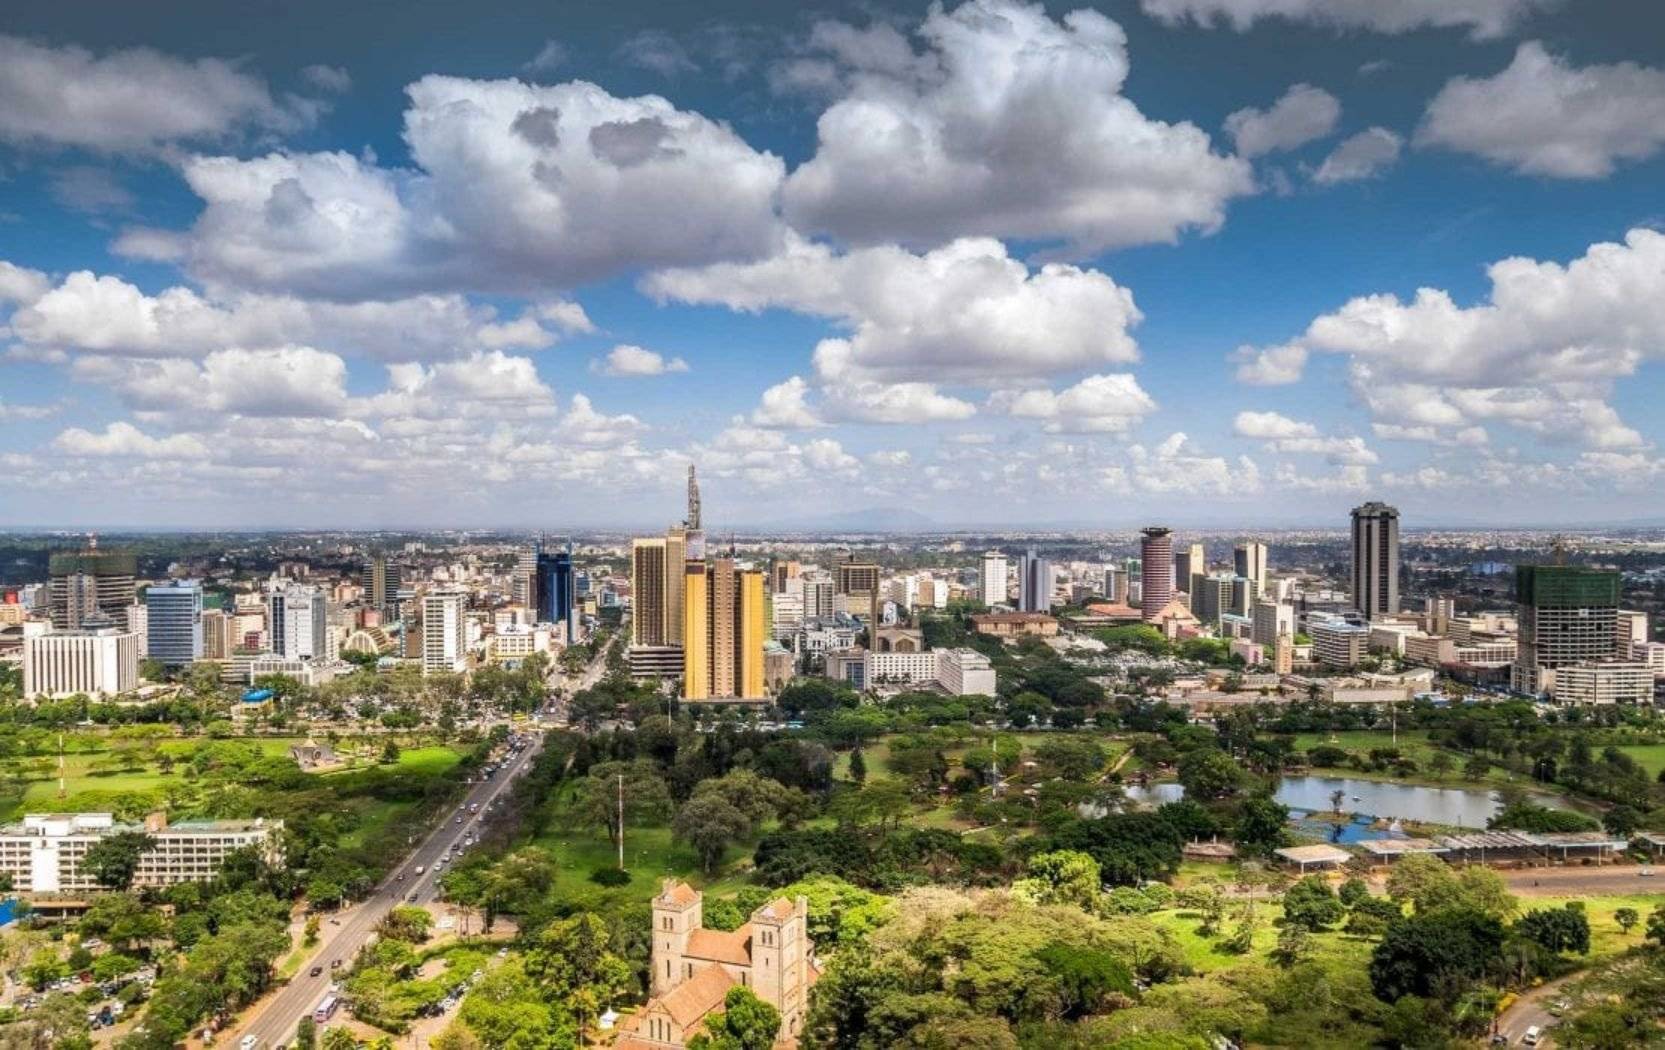 Arrivo in Kenya, la capitale Nairobi